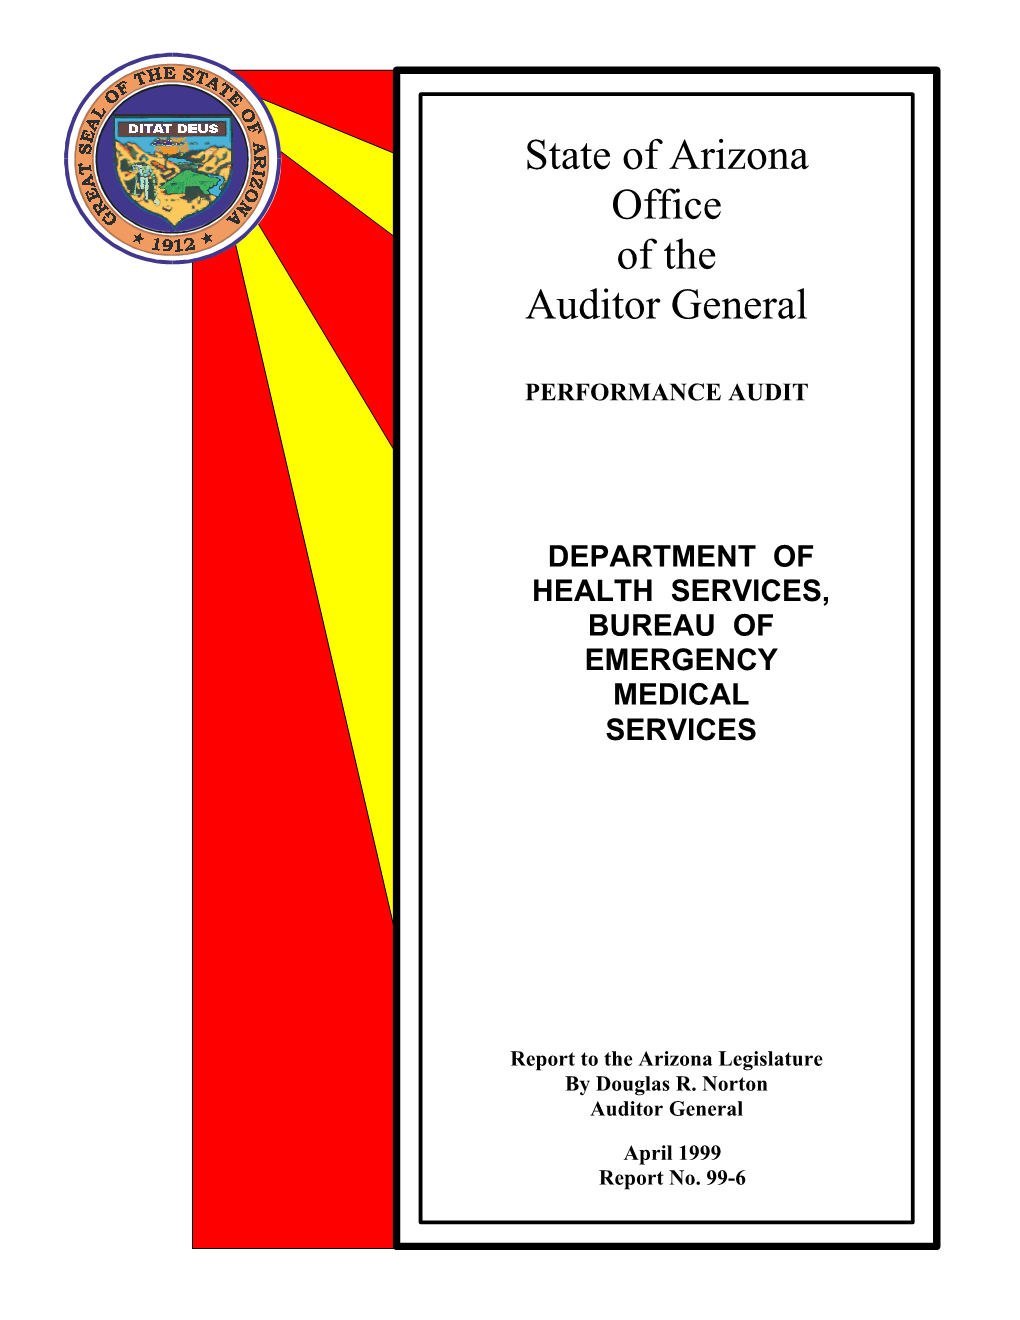 Report to the Arizona Legislature by Douglas R